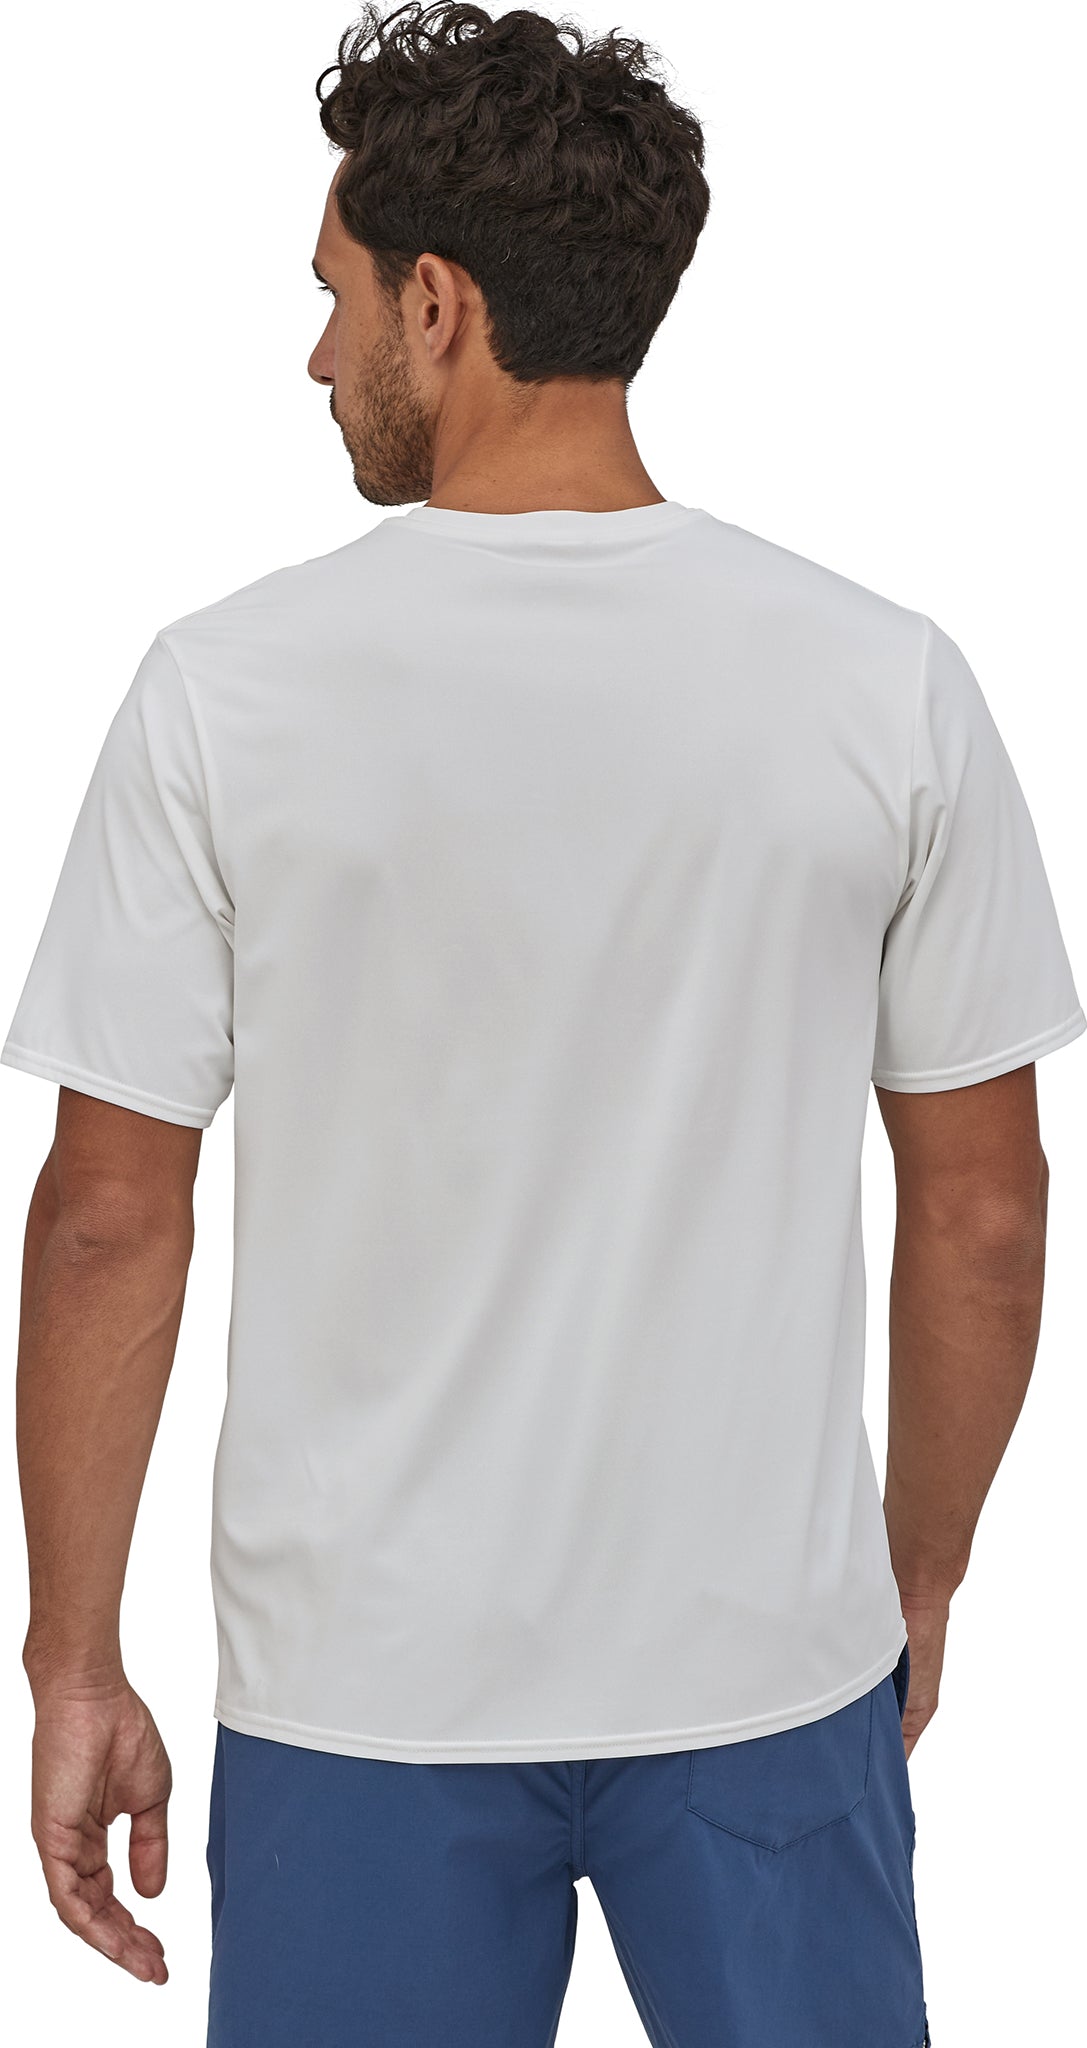 Patagonia Capilene Cool Daily T-Shirt - Men's XL Pumice - Dyno White X-Dye